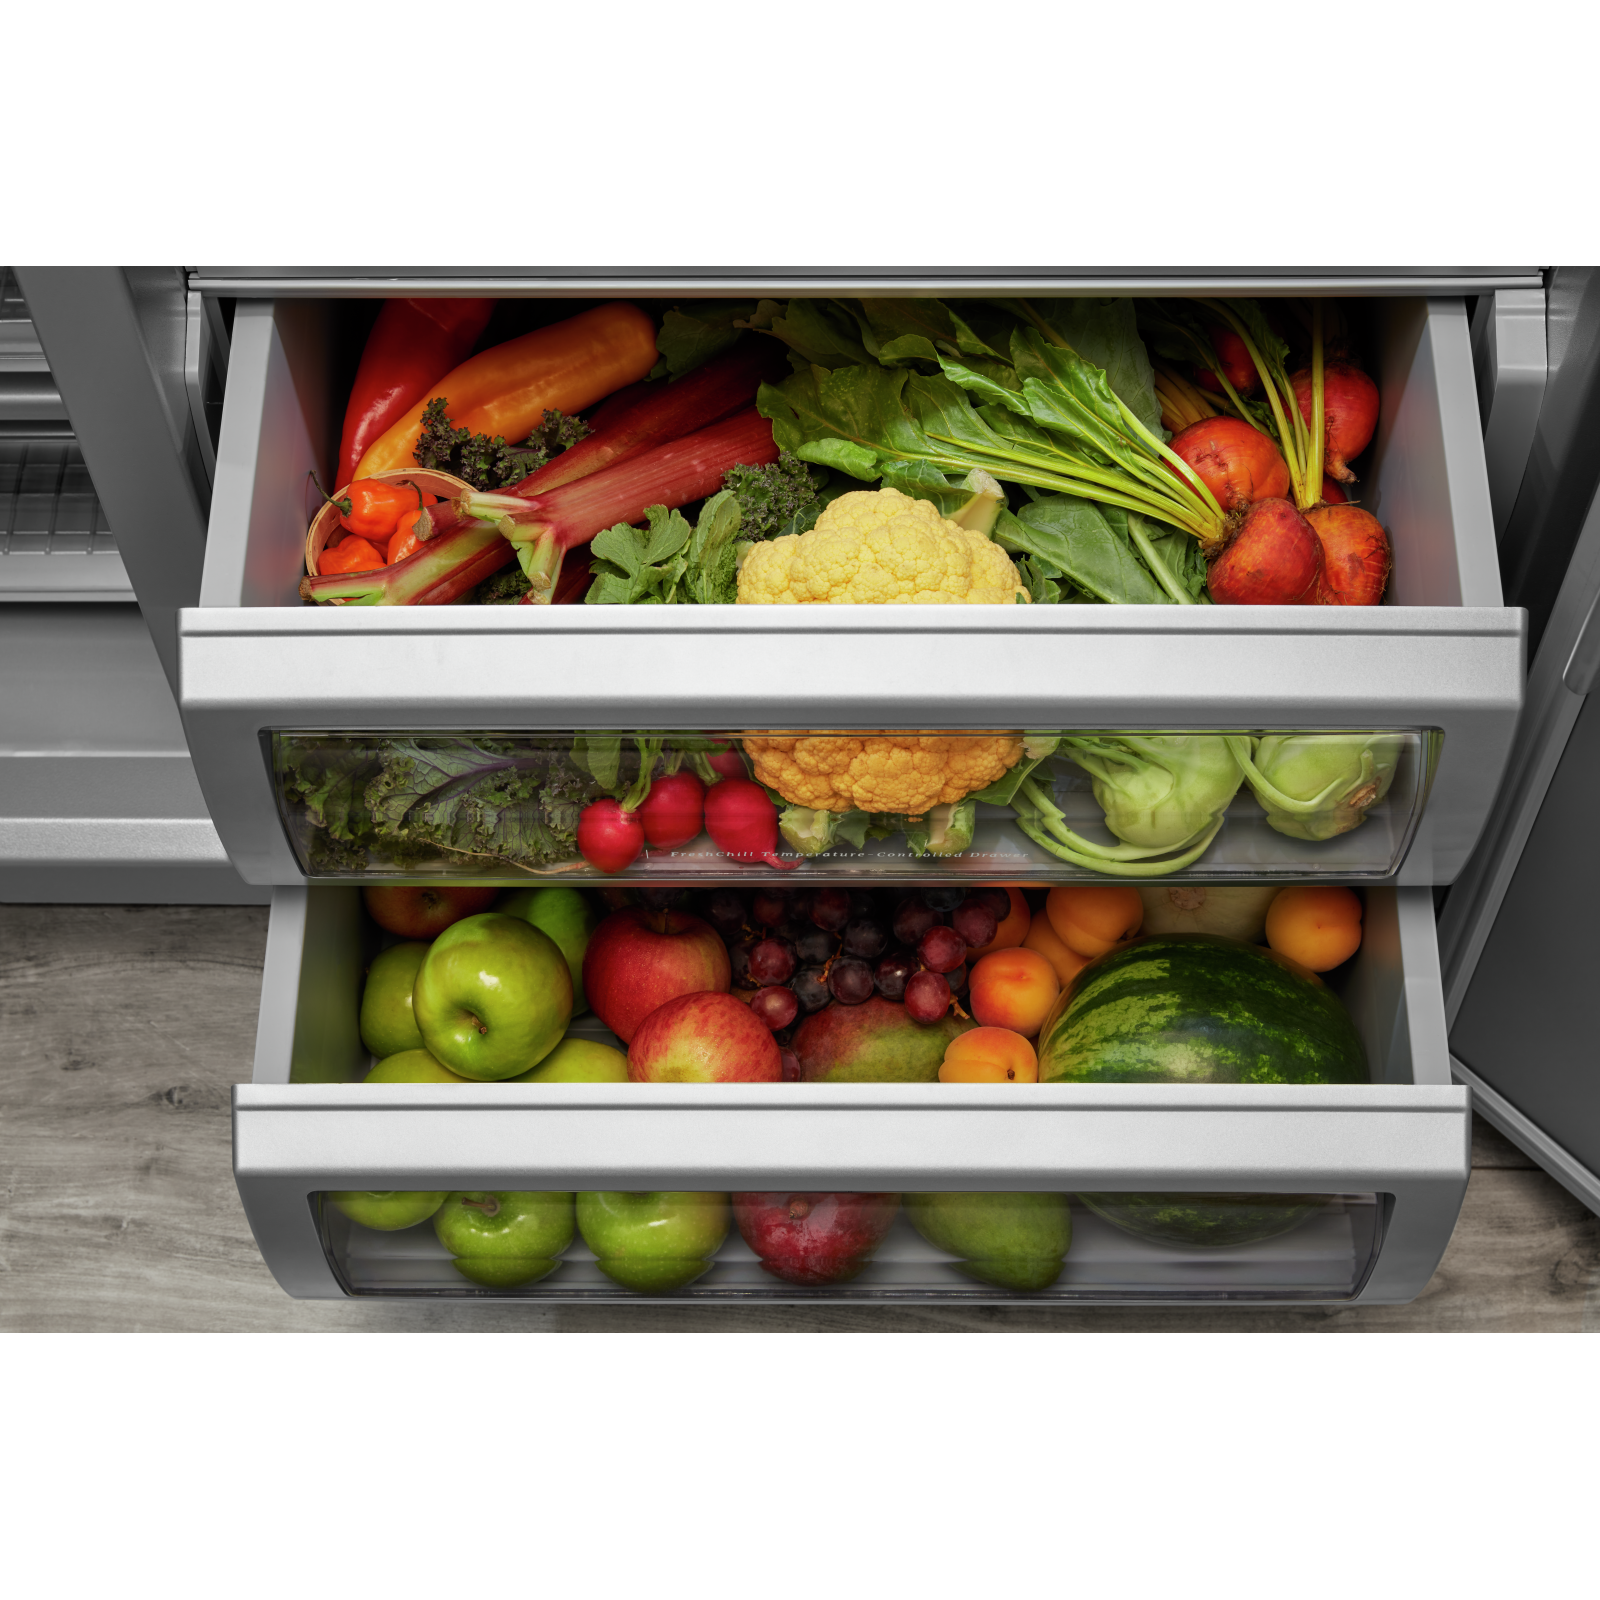 KitchenAid - 46.75 Inch 30 cu. ft Side-by-Side Refrigerator in Panel Ready - KBSN708MPA